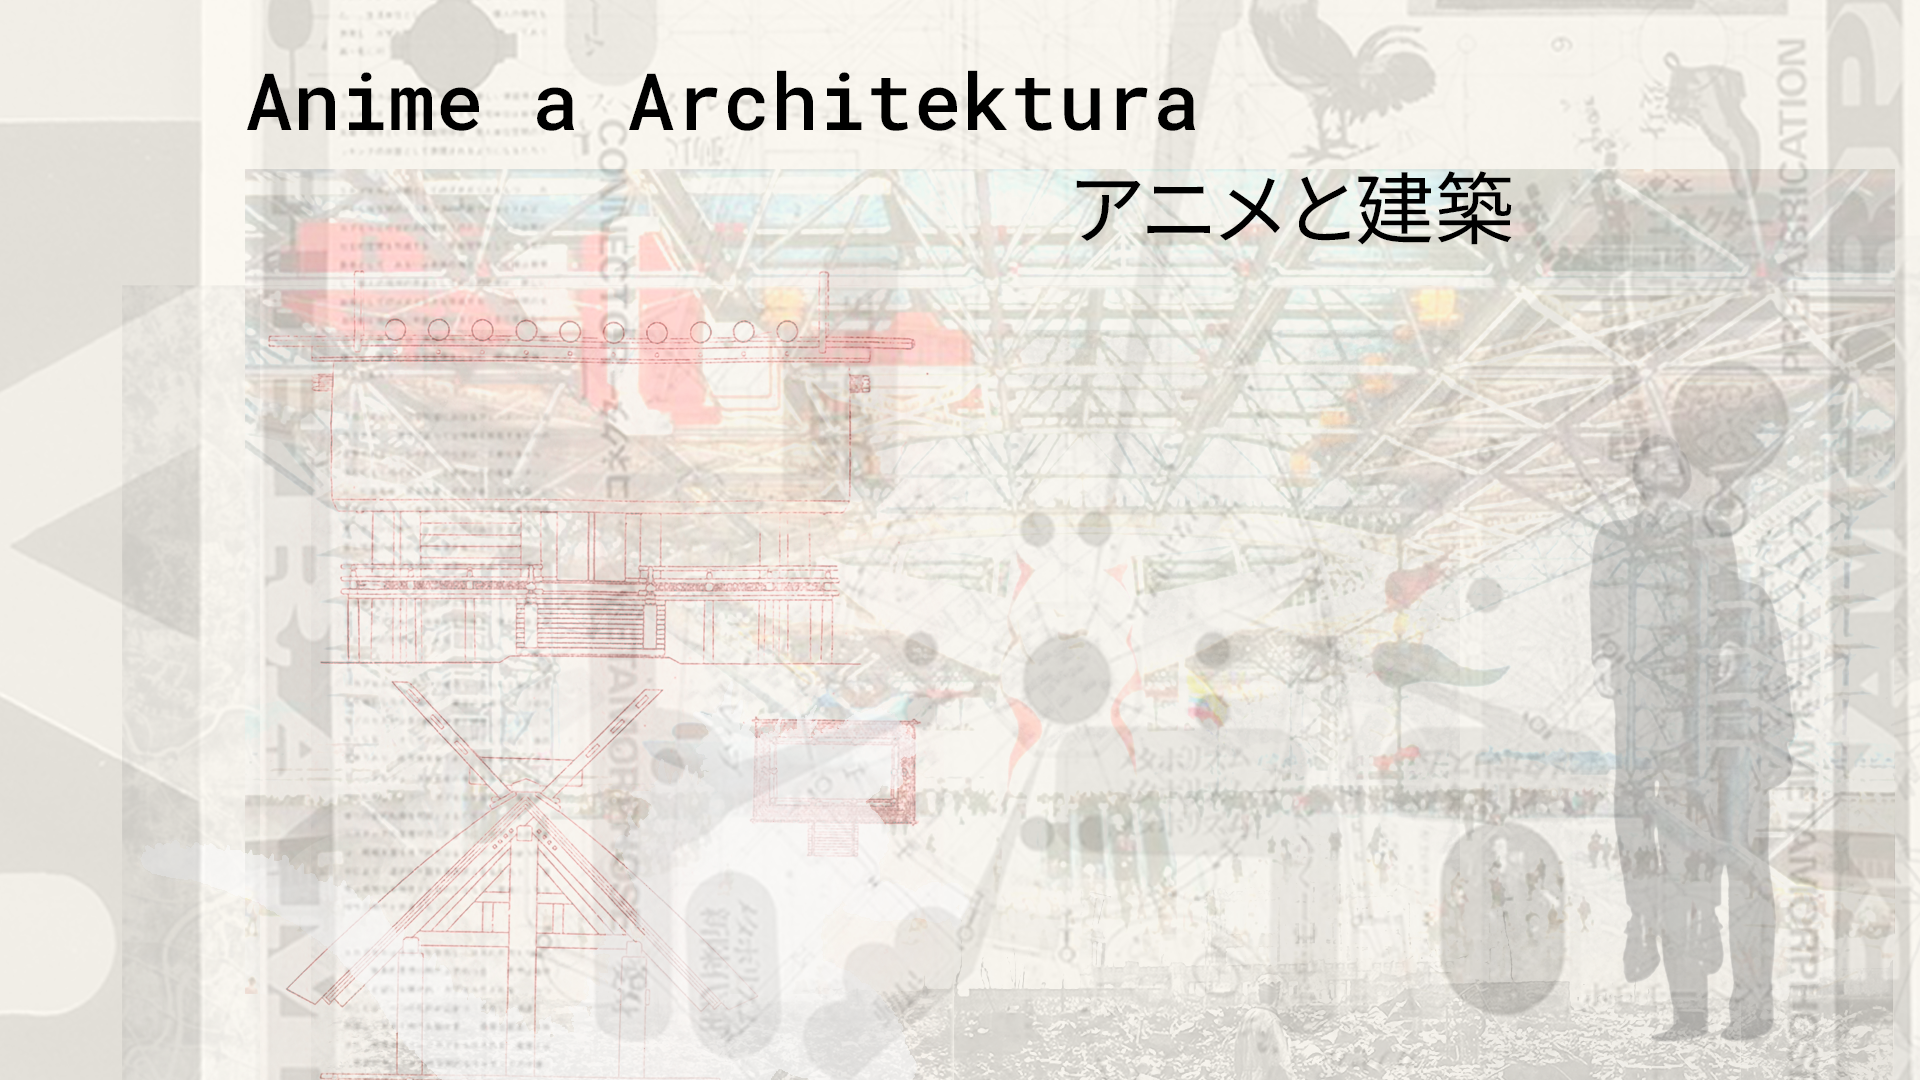 Architektura a anime